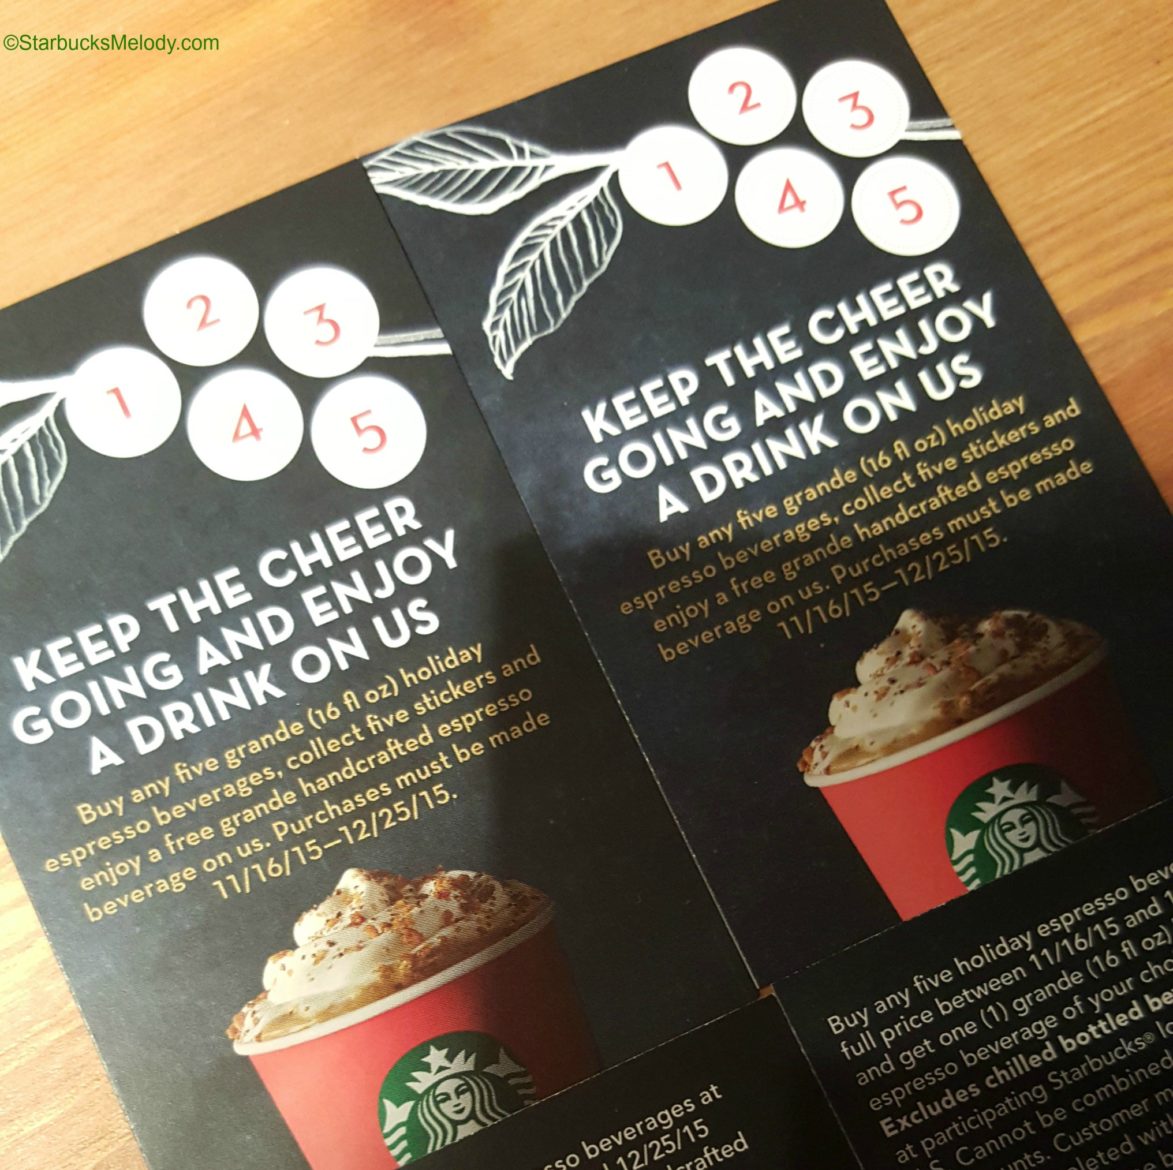 Buy 5 Grande Holiday Drinks at Starbucks Get one free